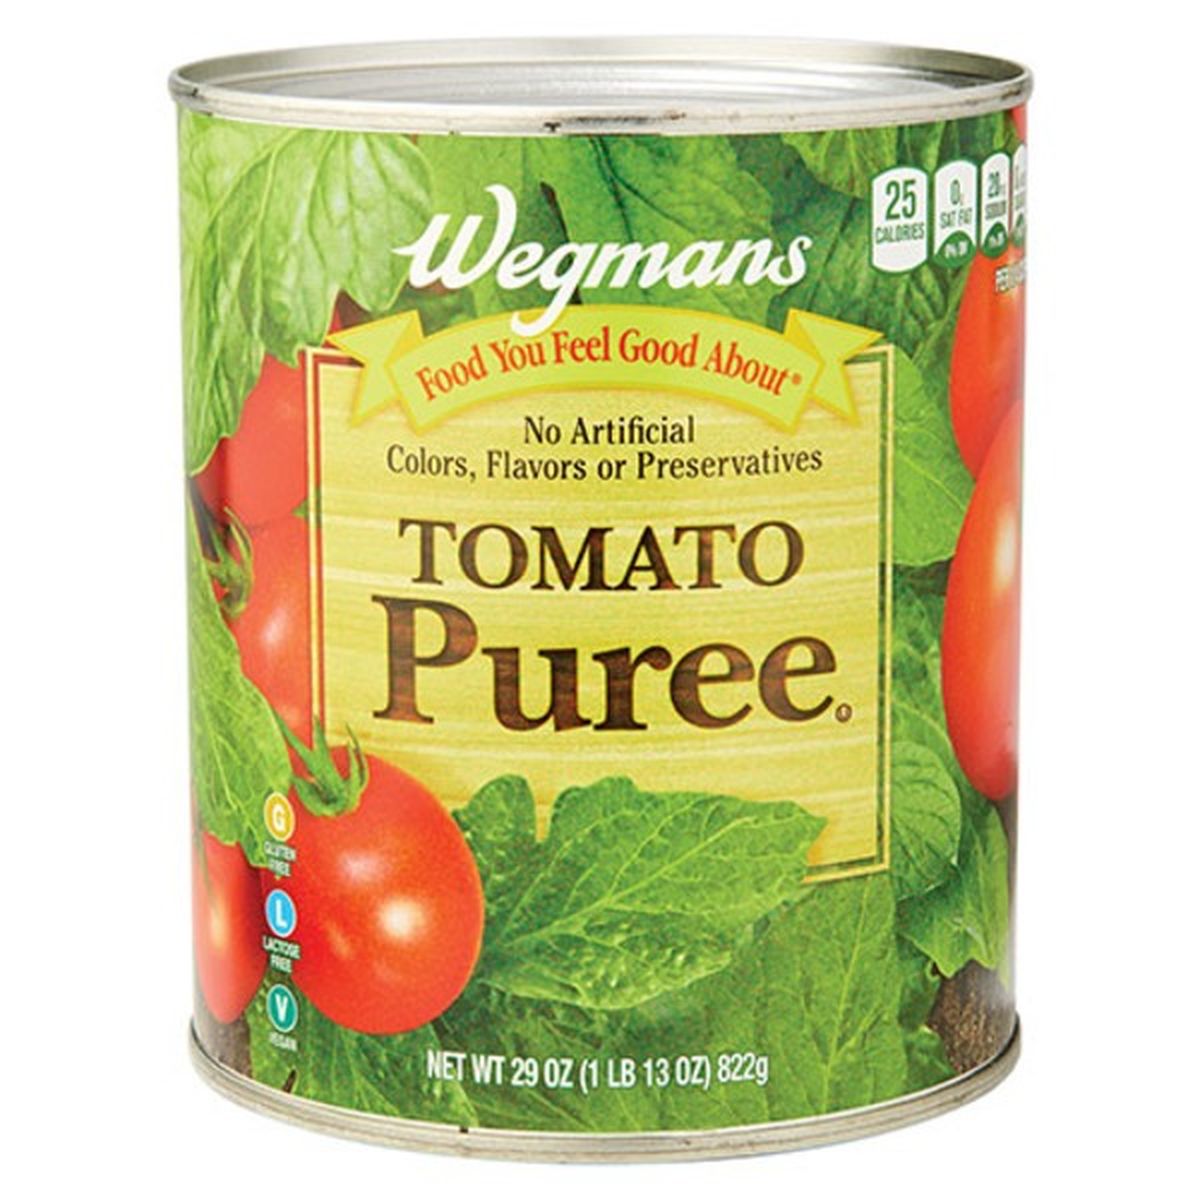 Calories in Wegmans Tomato Puree